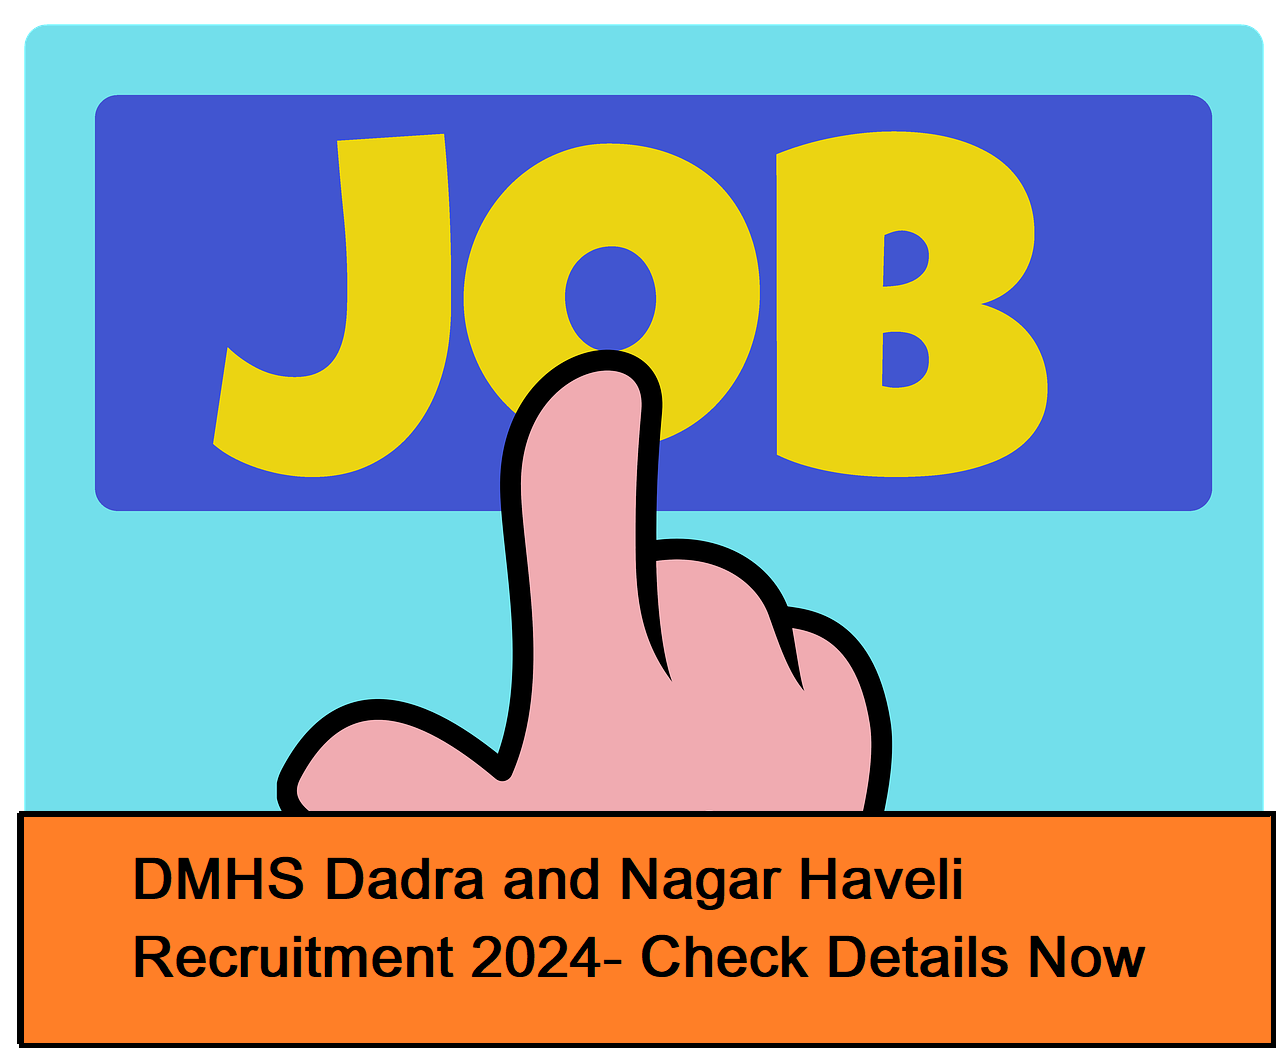 DMHS Dadra and Nagar Haveli Recruitment